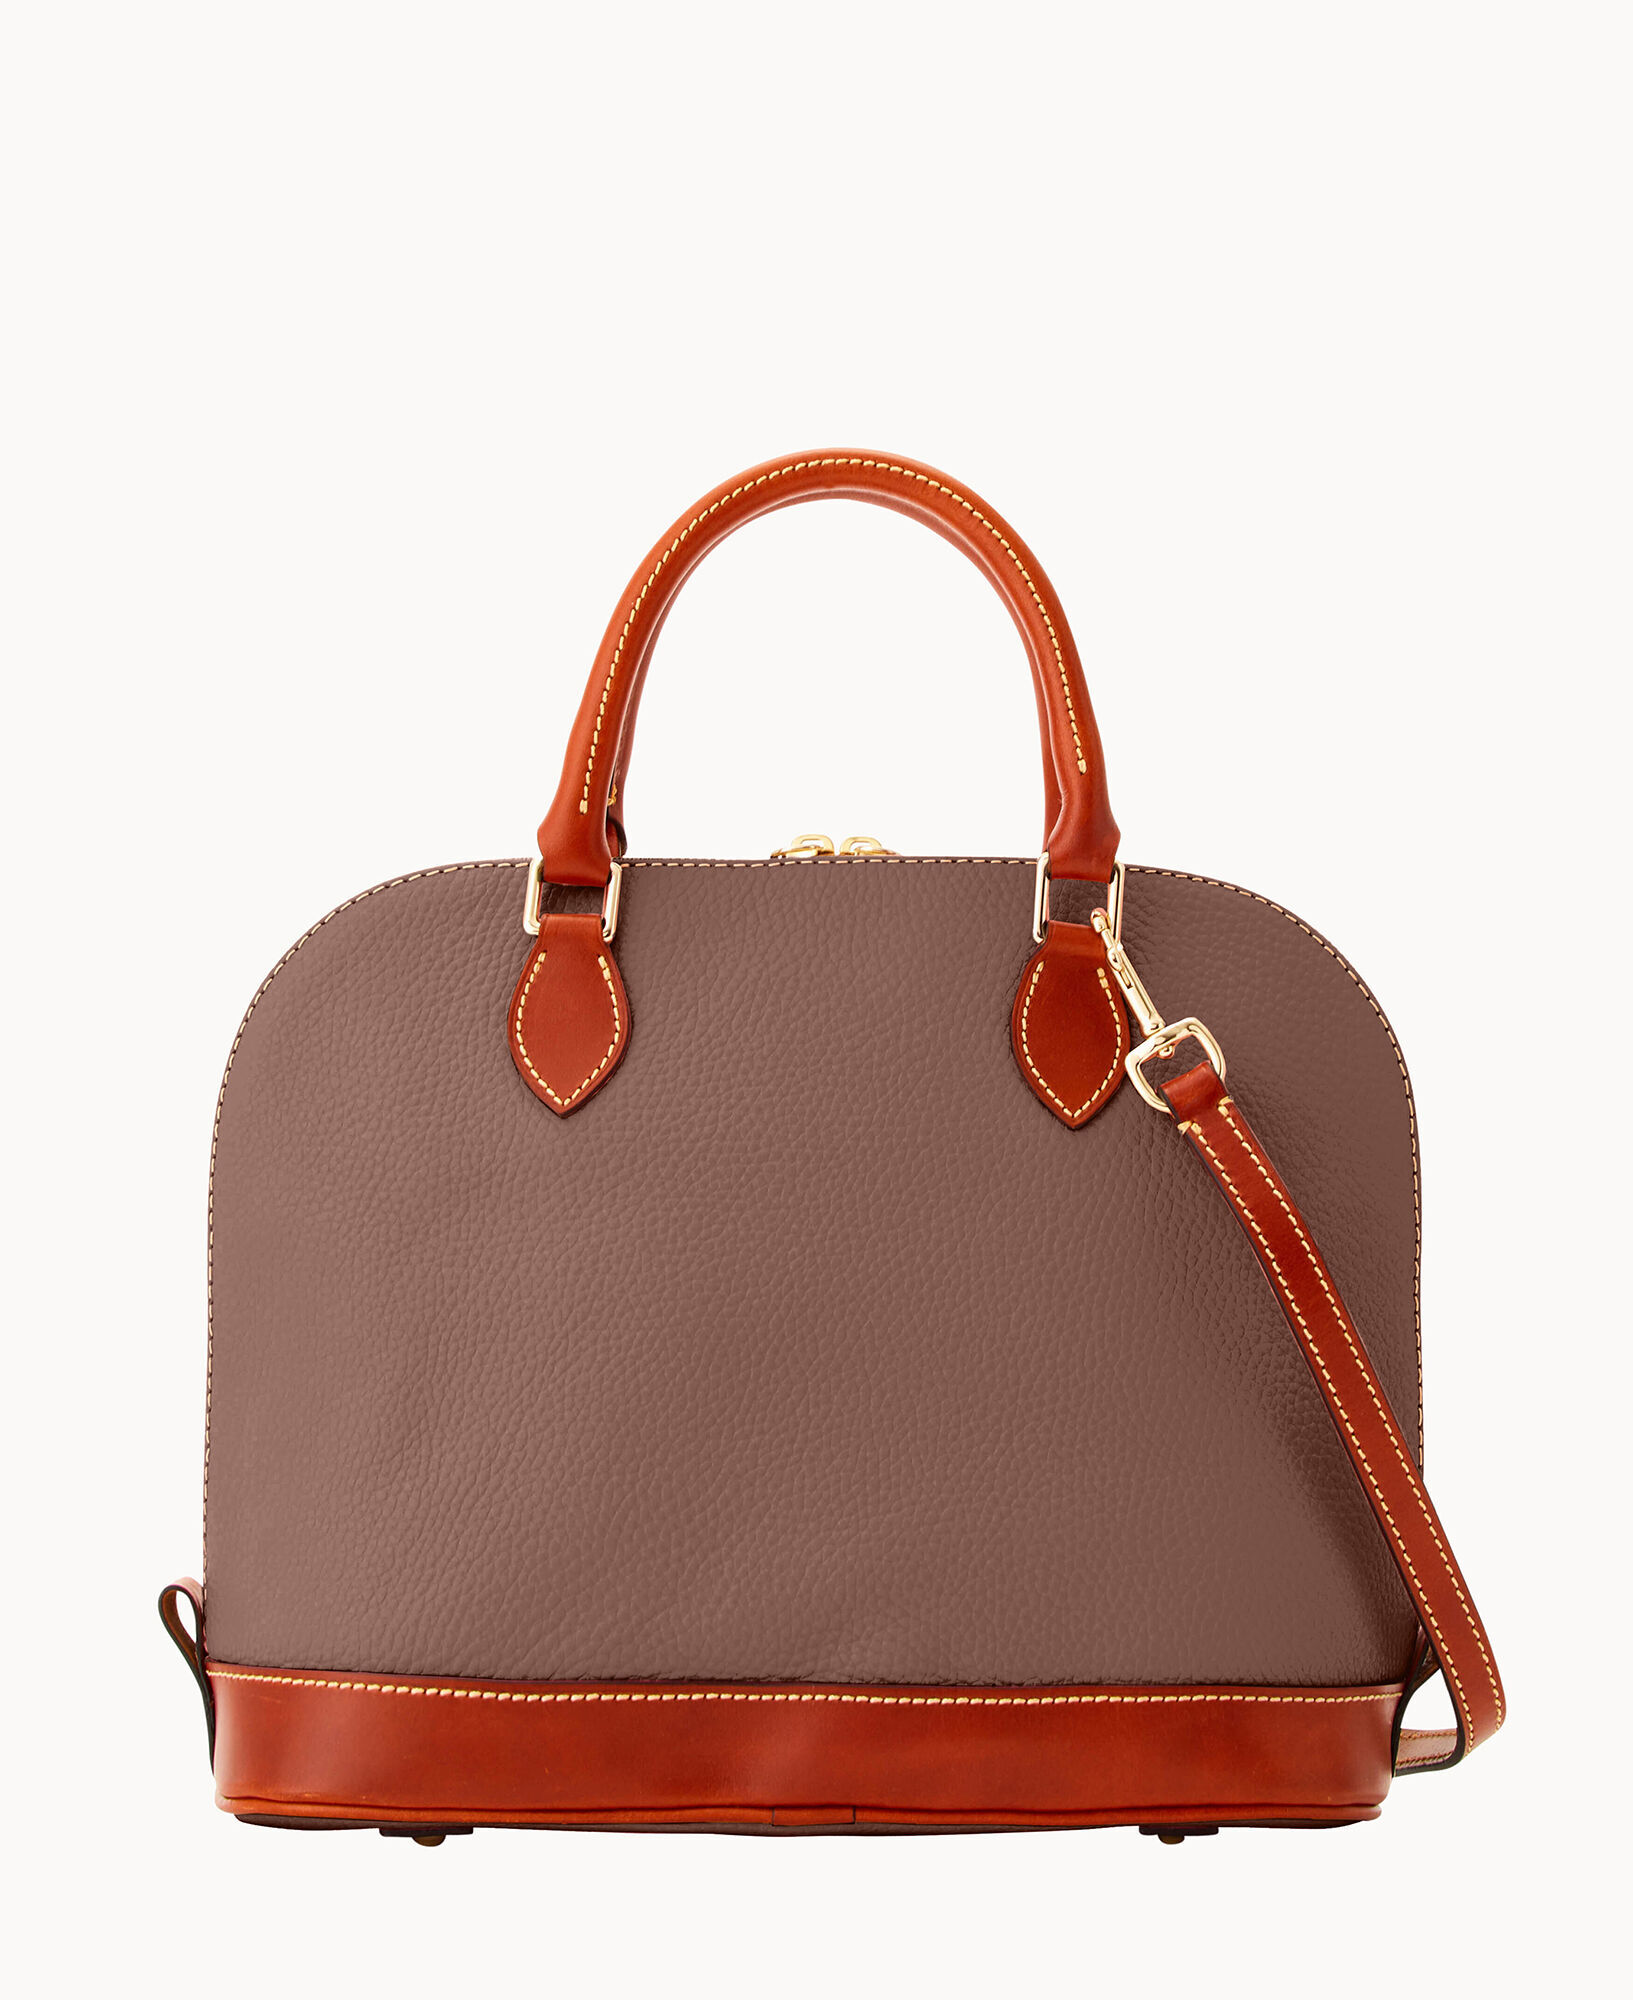 Louis Vuitton' handbag smaller than grain of salt sells for more